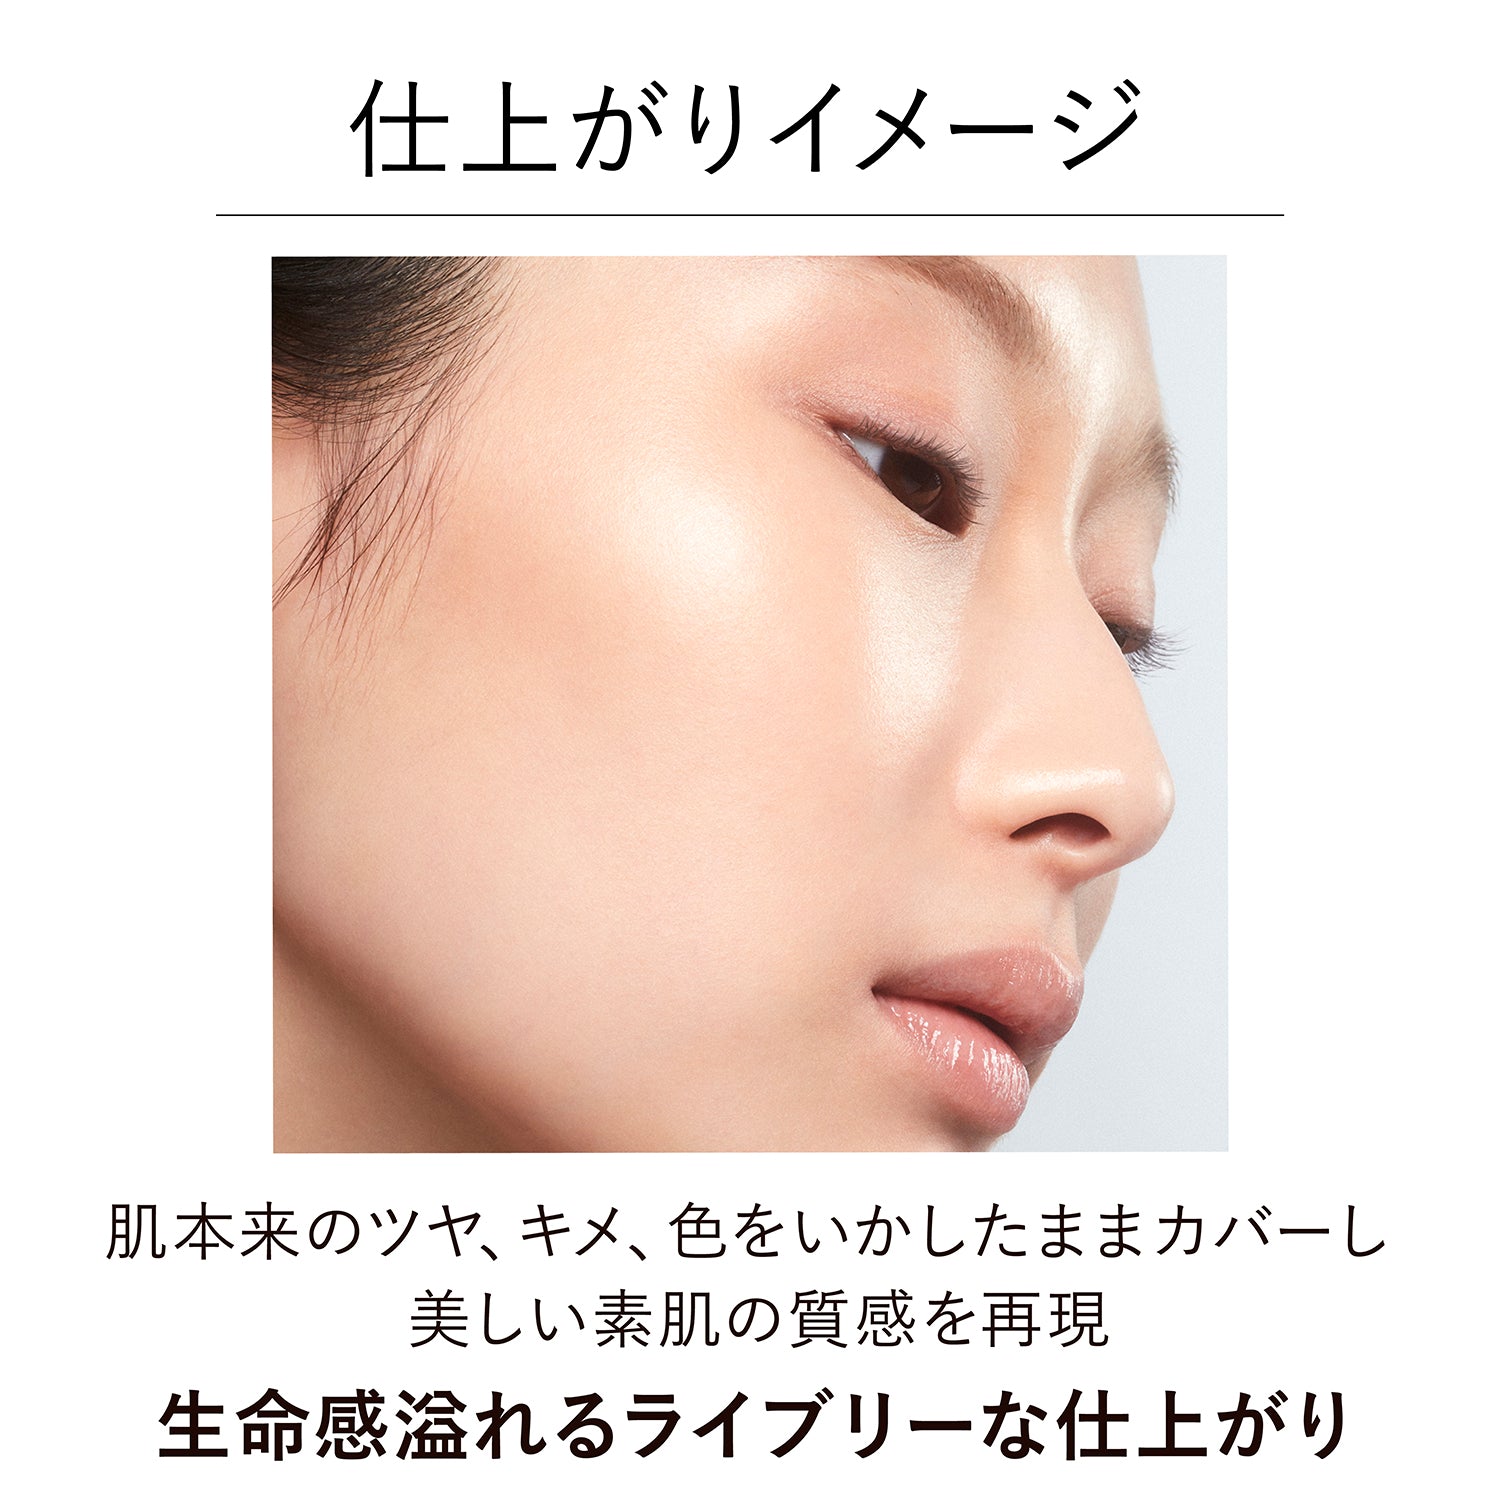 Kanebo Lively Skin Wear - Ichiban Mart